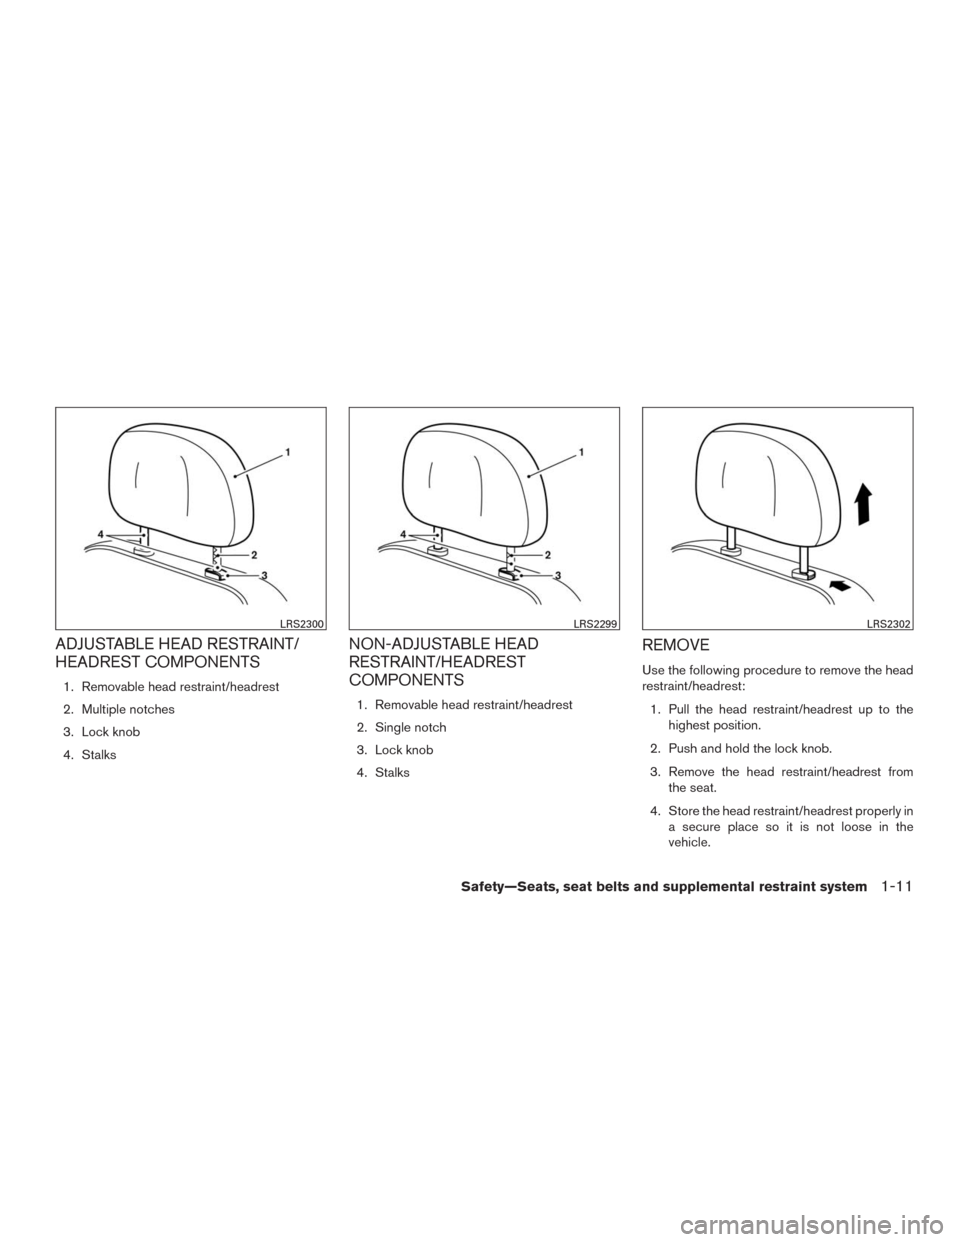 NISSAN MURANO 2016 3.G Owners Manual ADJUSTABLE HEAD RESTRAINT/
HEADREST COMPONENTS
1. Removable head restraint/headrest
2. Multiple notches
3. Lock knob
4. Stalks
NON-ADJUSTABLE HEAD
RESTRAINT/HEADREST
COMPONENTS
1. Removable head restr